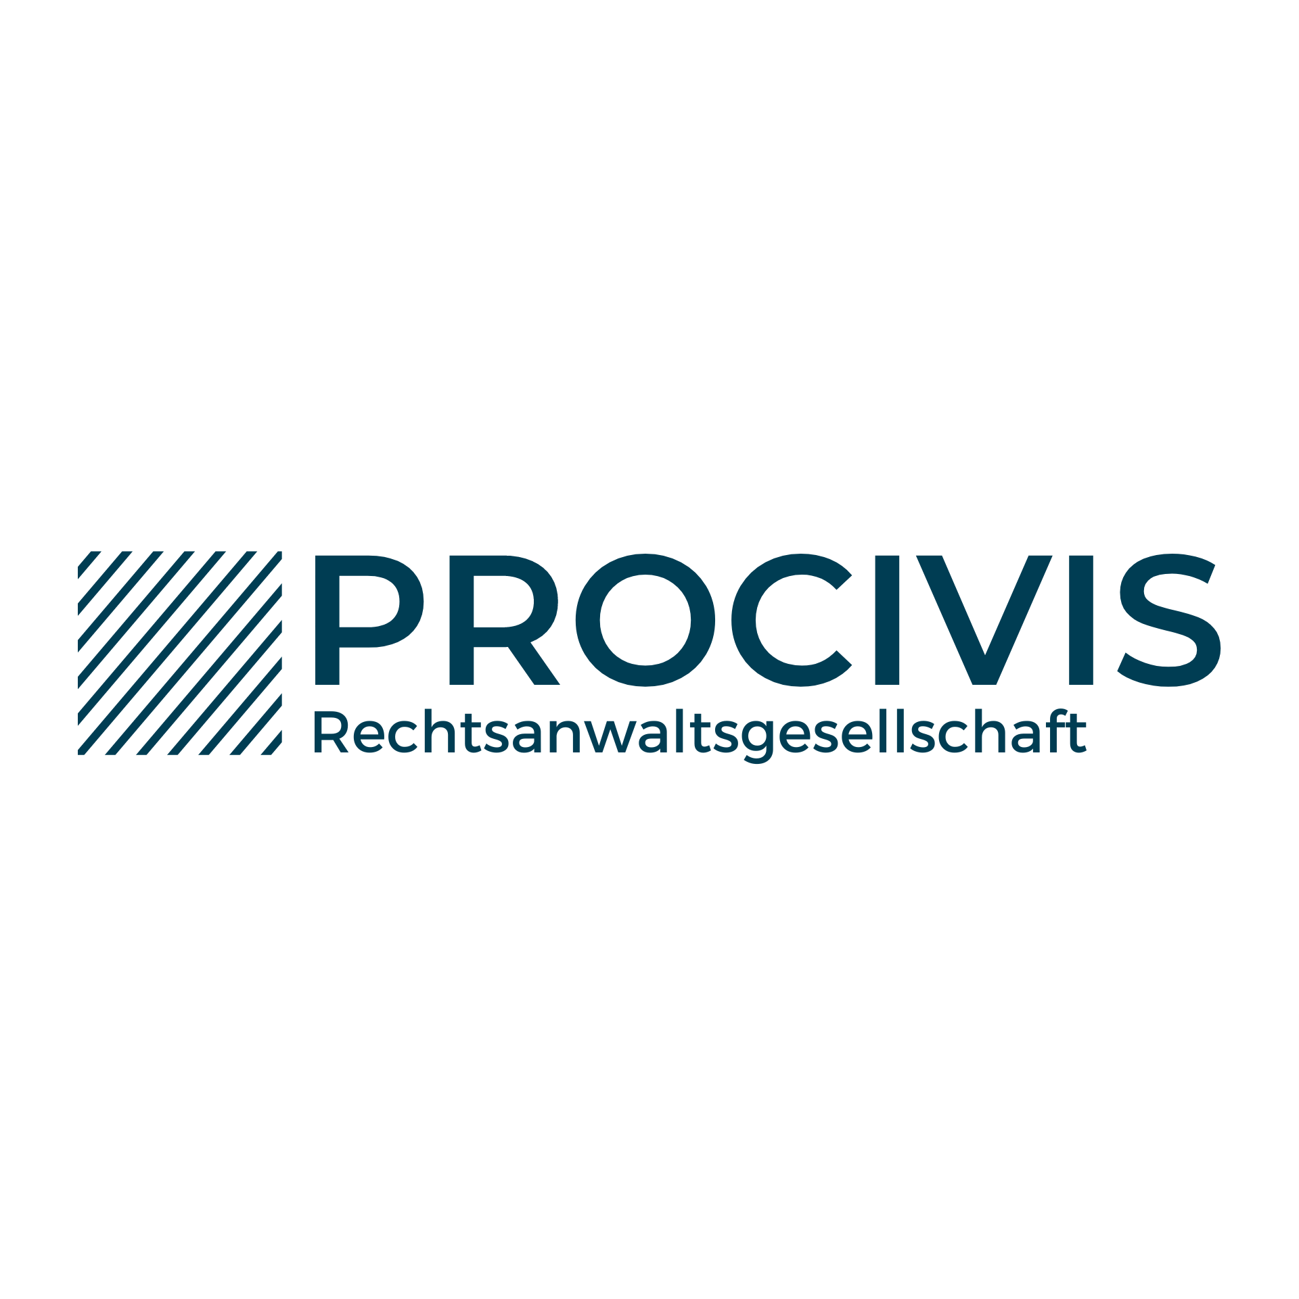 procivis_logo